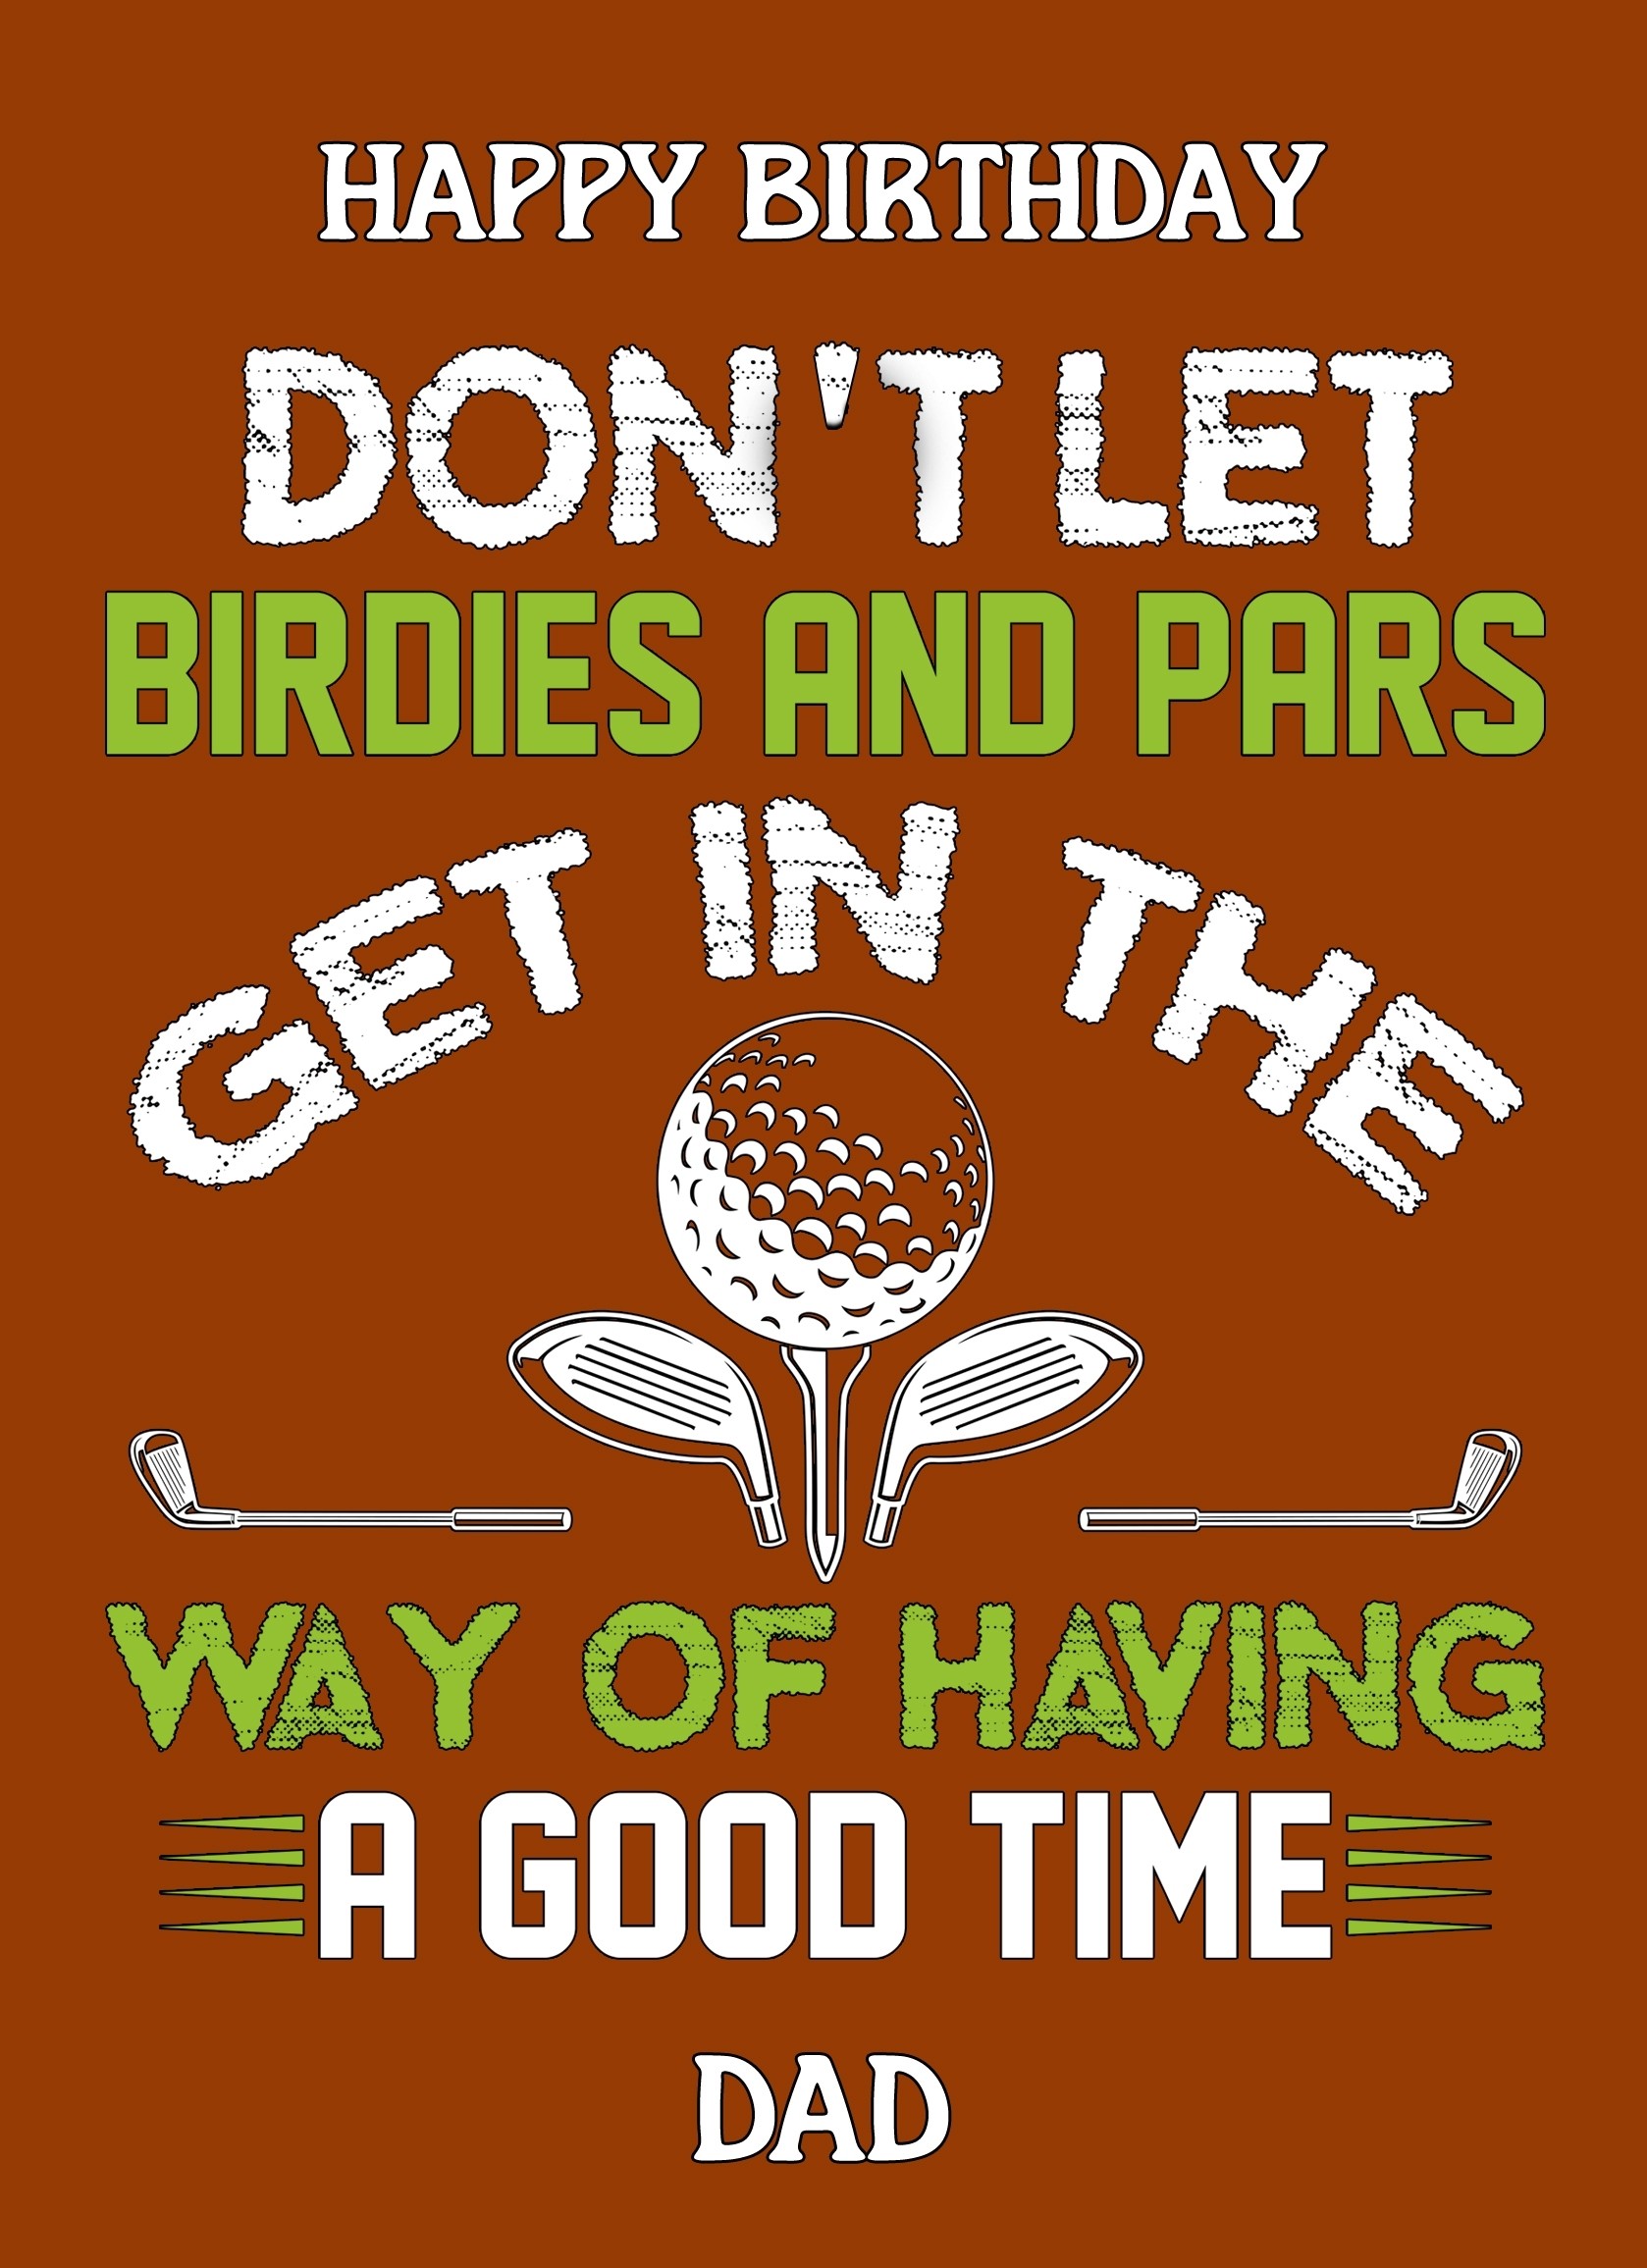 Funny Golf Birthday Card for Dad (Design 3)